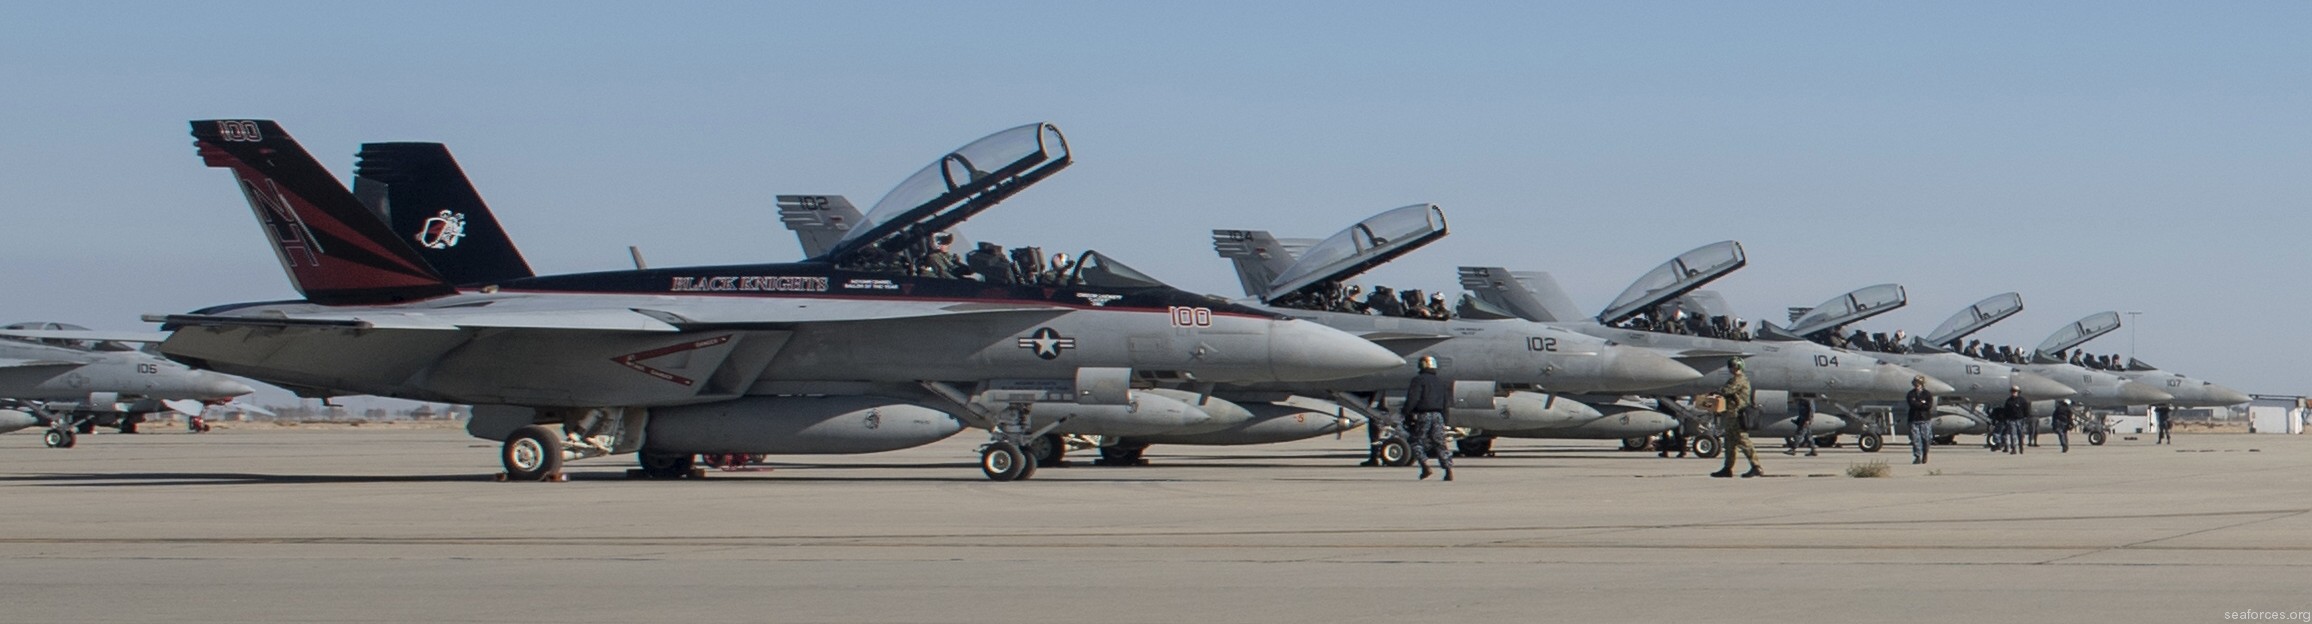 vfa-154 black knights strike fighter squadron navy f/a-18f super hornet 07 nas lemoore california